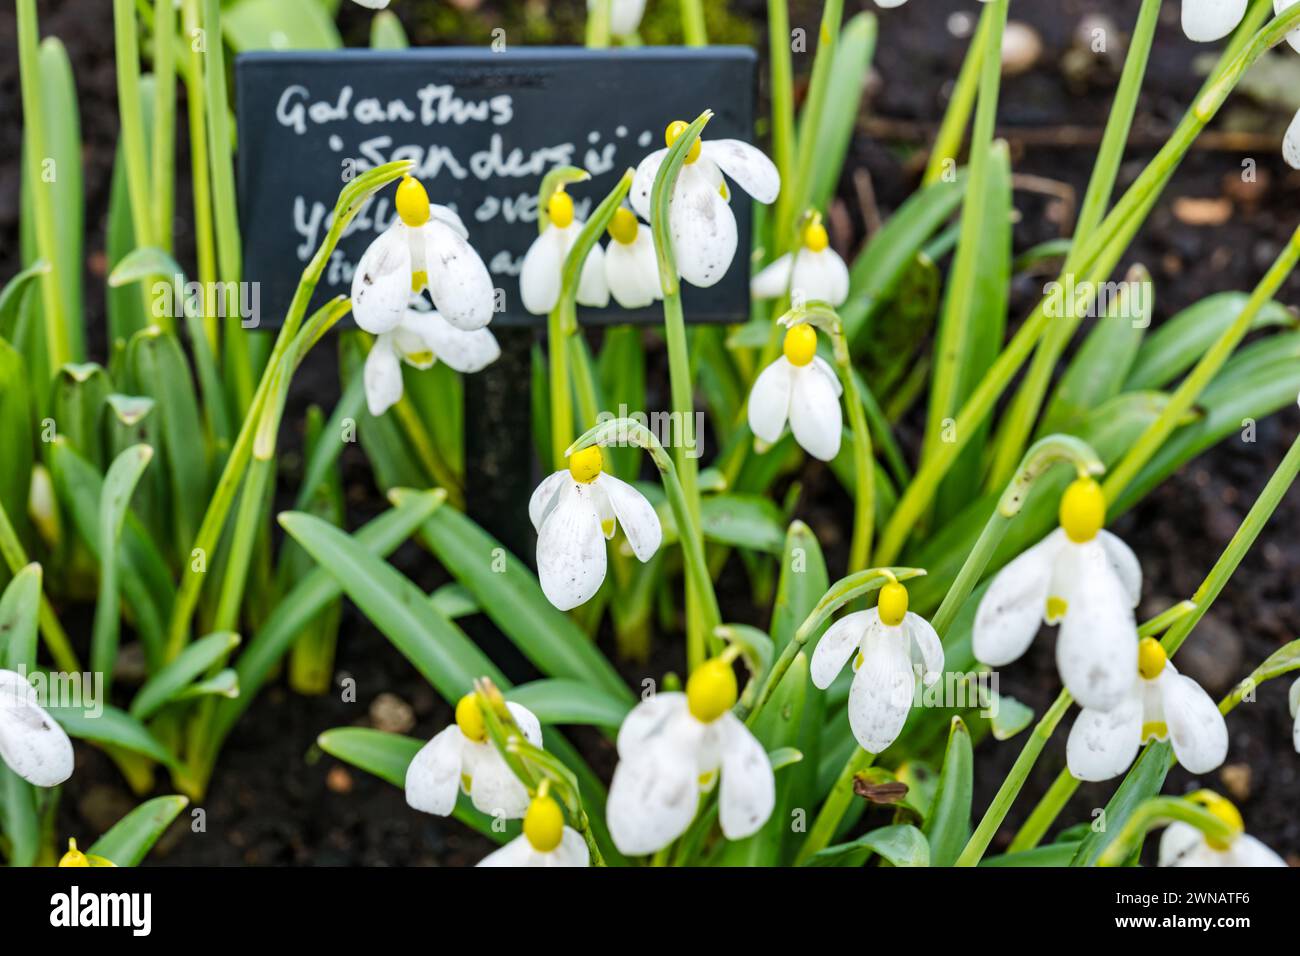 Snowdrops variety label, (Galanthus nivalis Sandersii), Scotland, UK Stock Photo